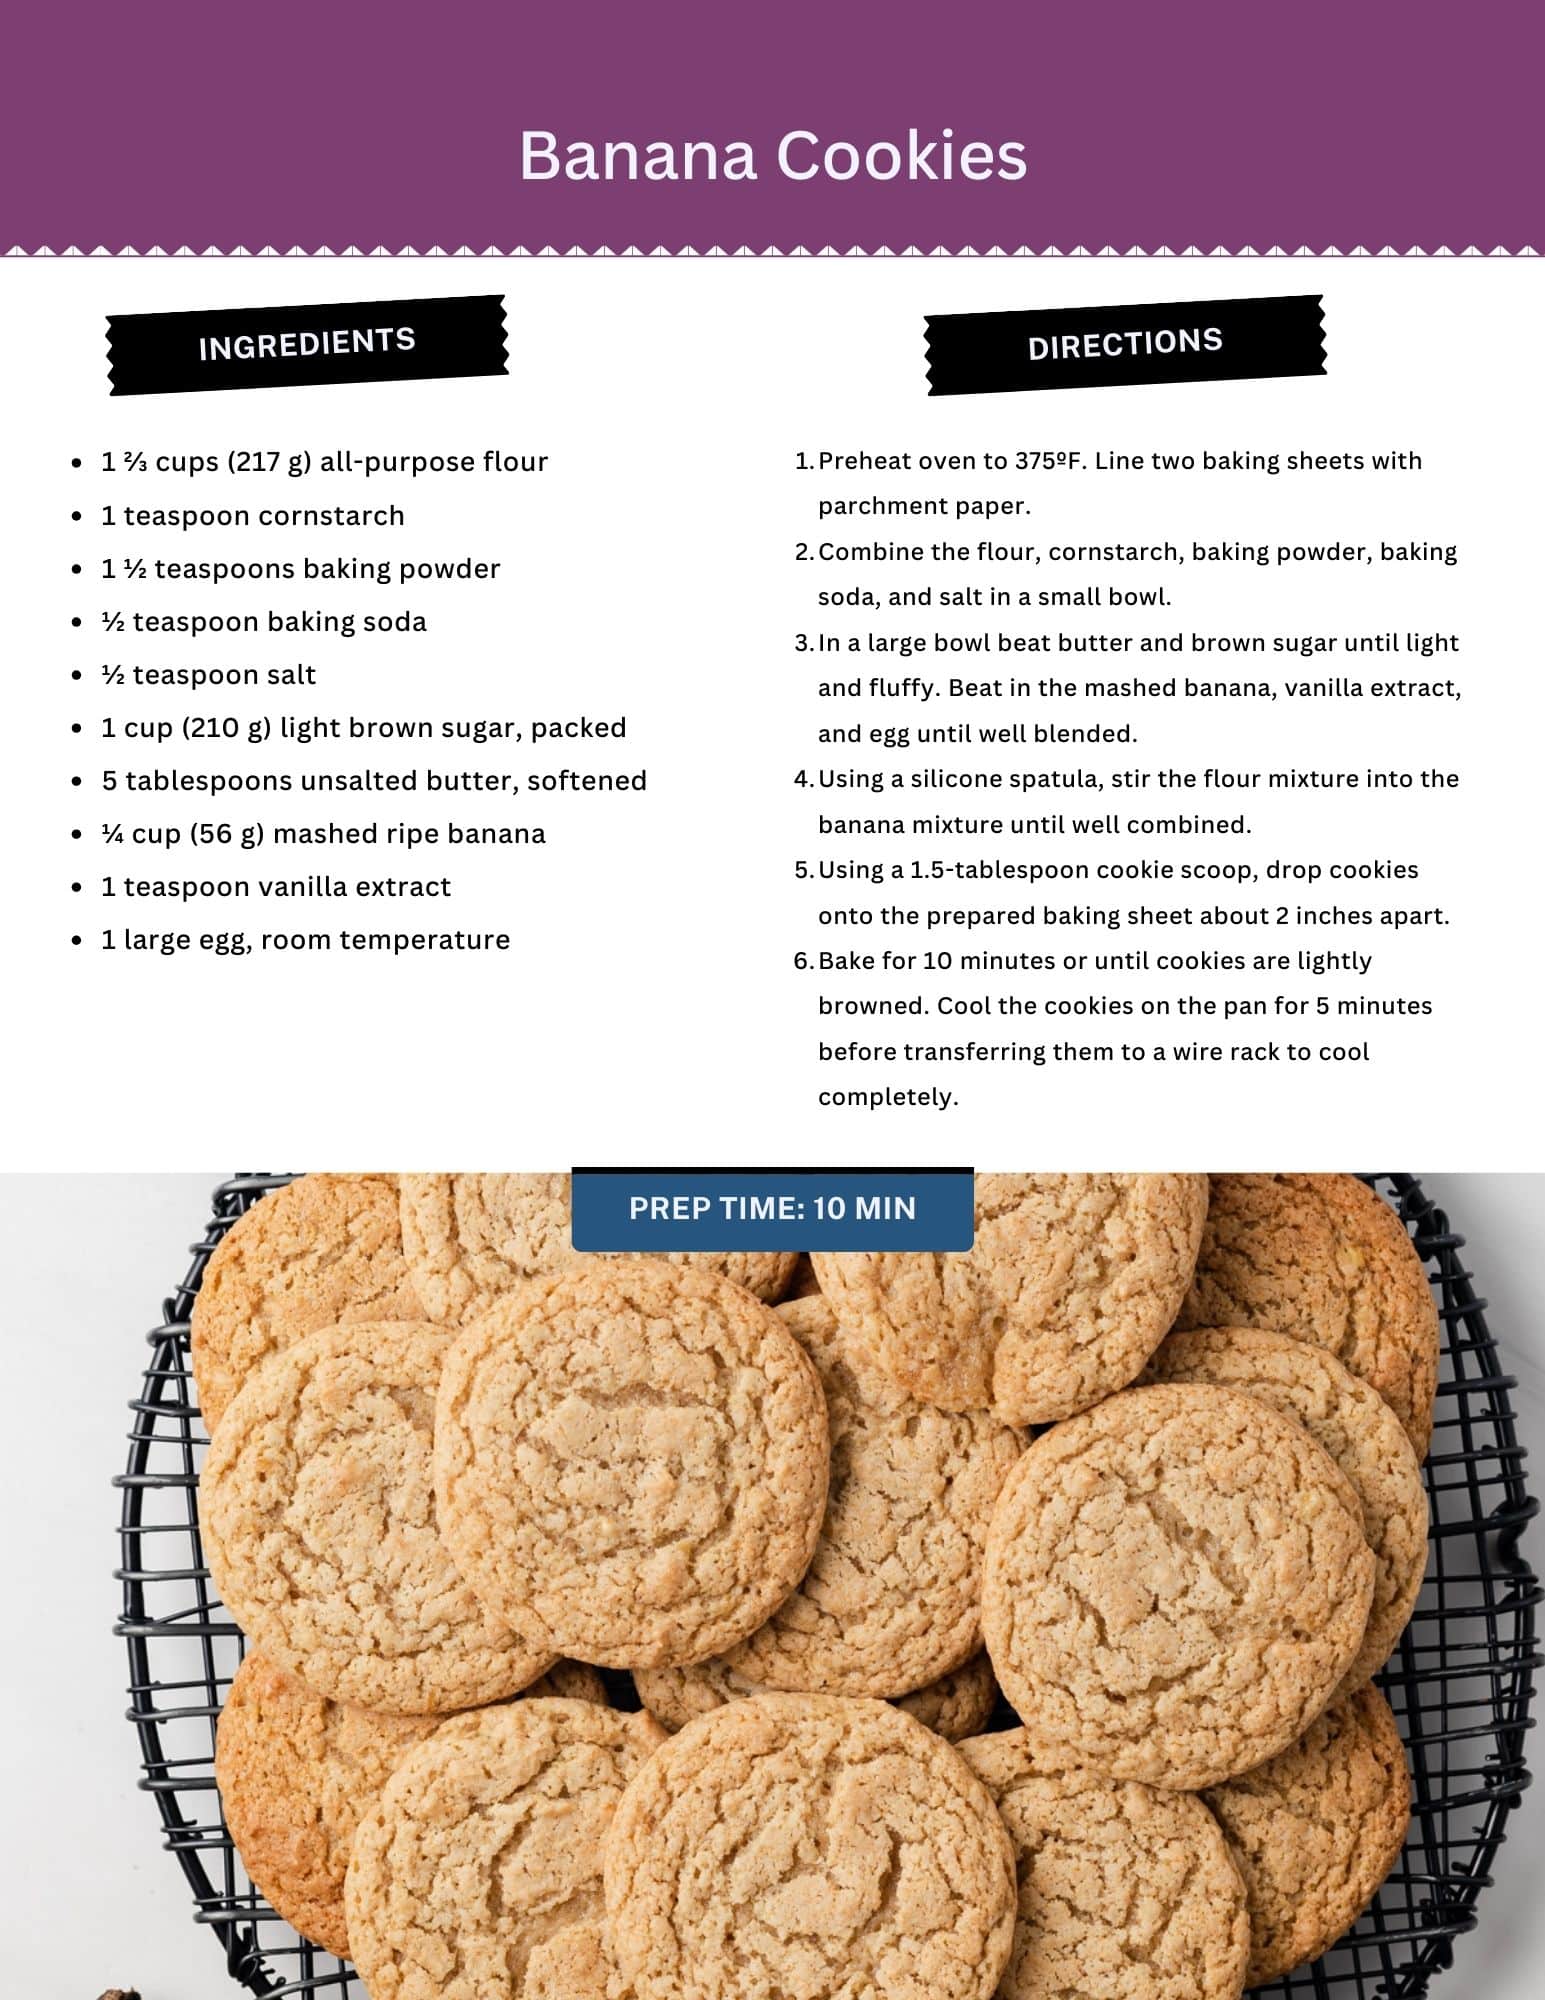 Baking ebook sample recipes.